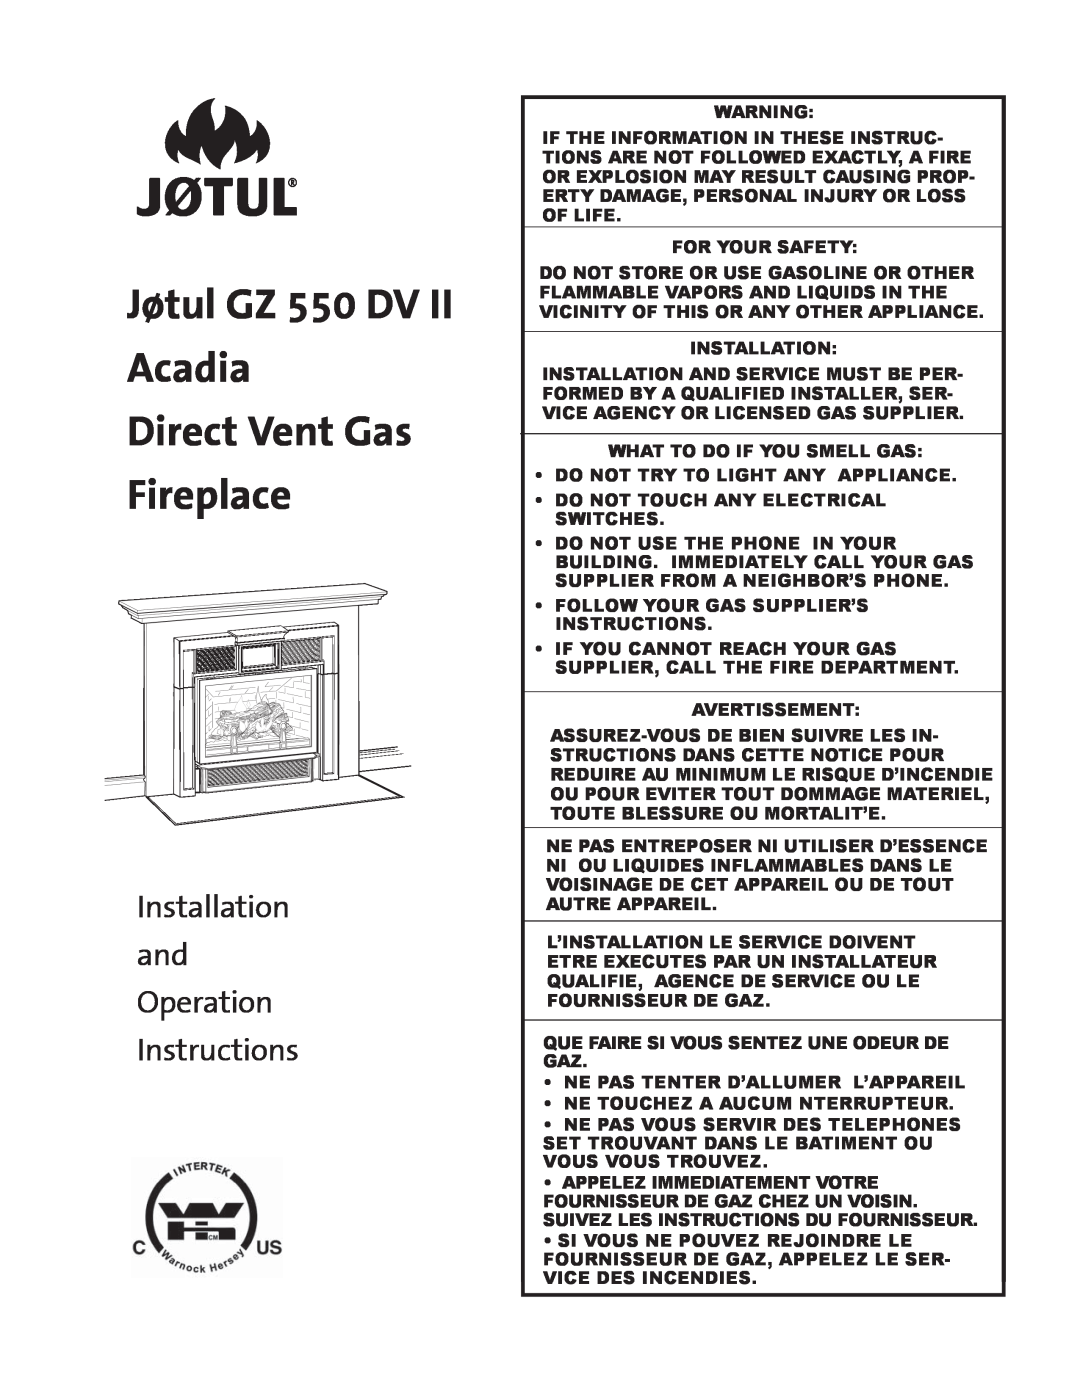 Jotul GZ 550 DV II manual Jøtul GZ 550 DV Acadia Direct Vent Gas Fireplace, Installation and Operation Instructions 